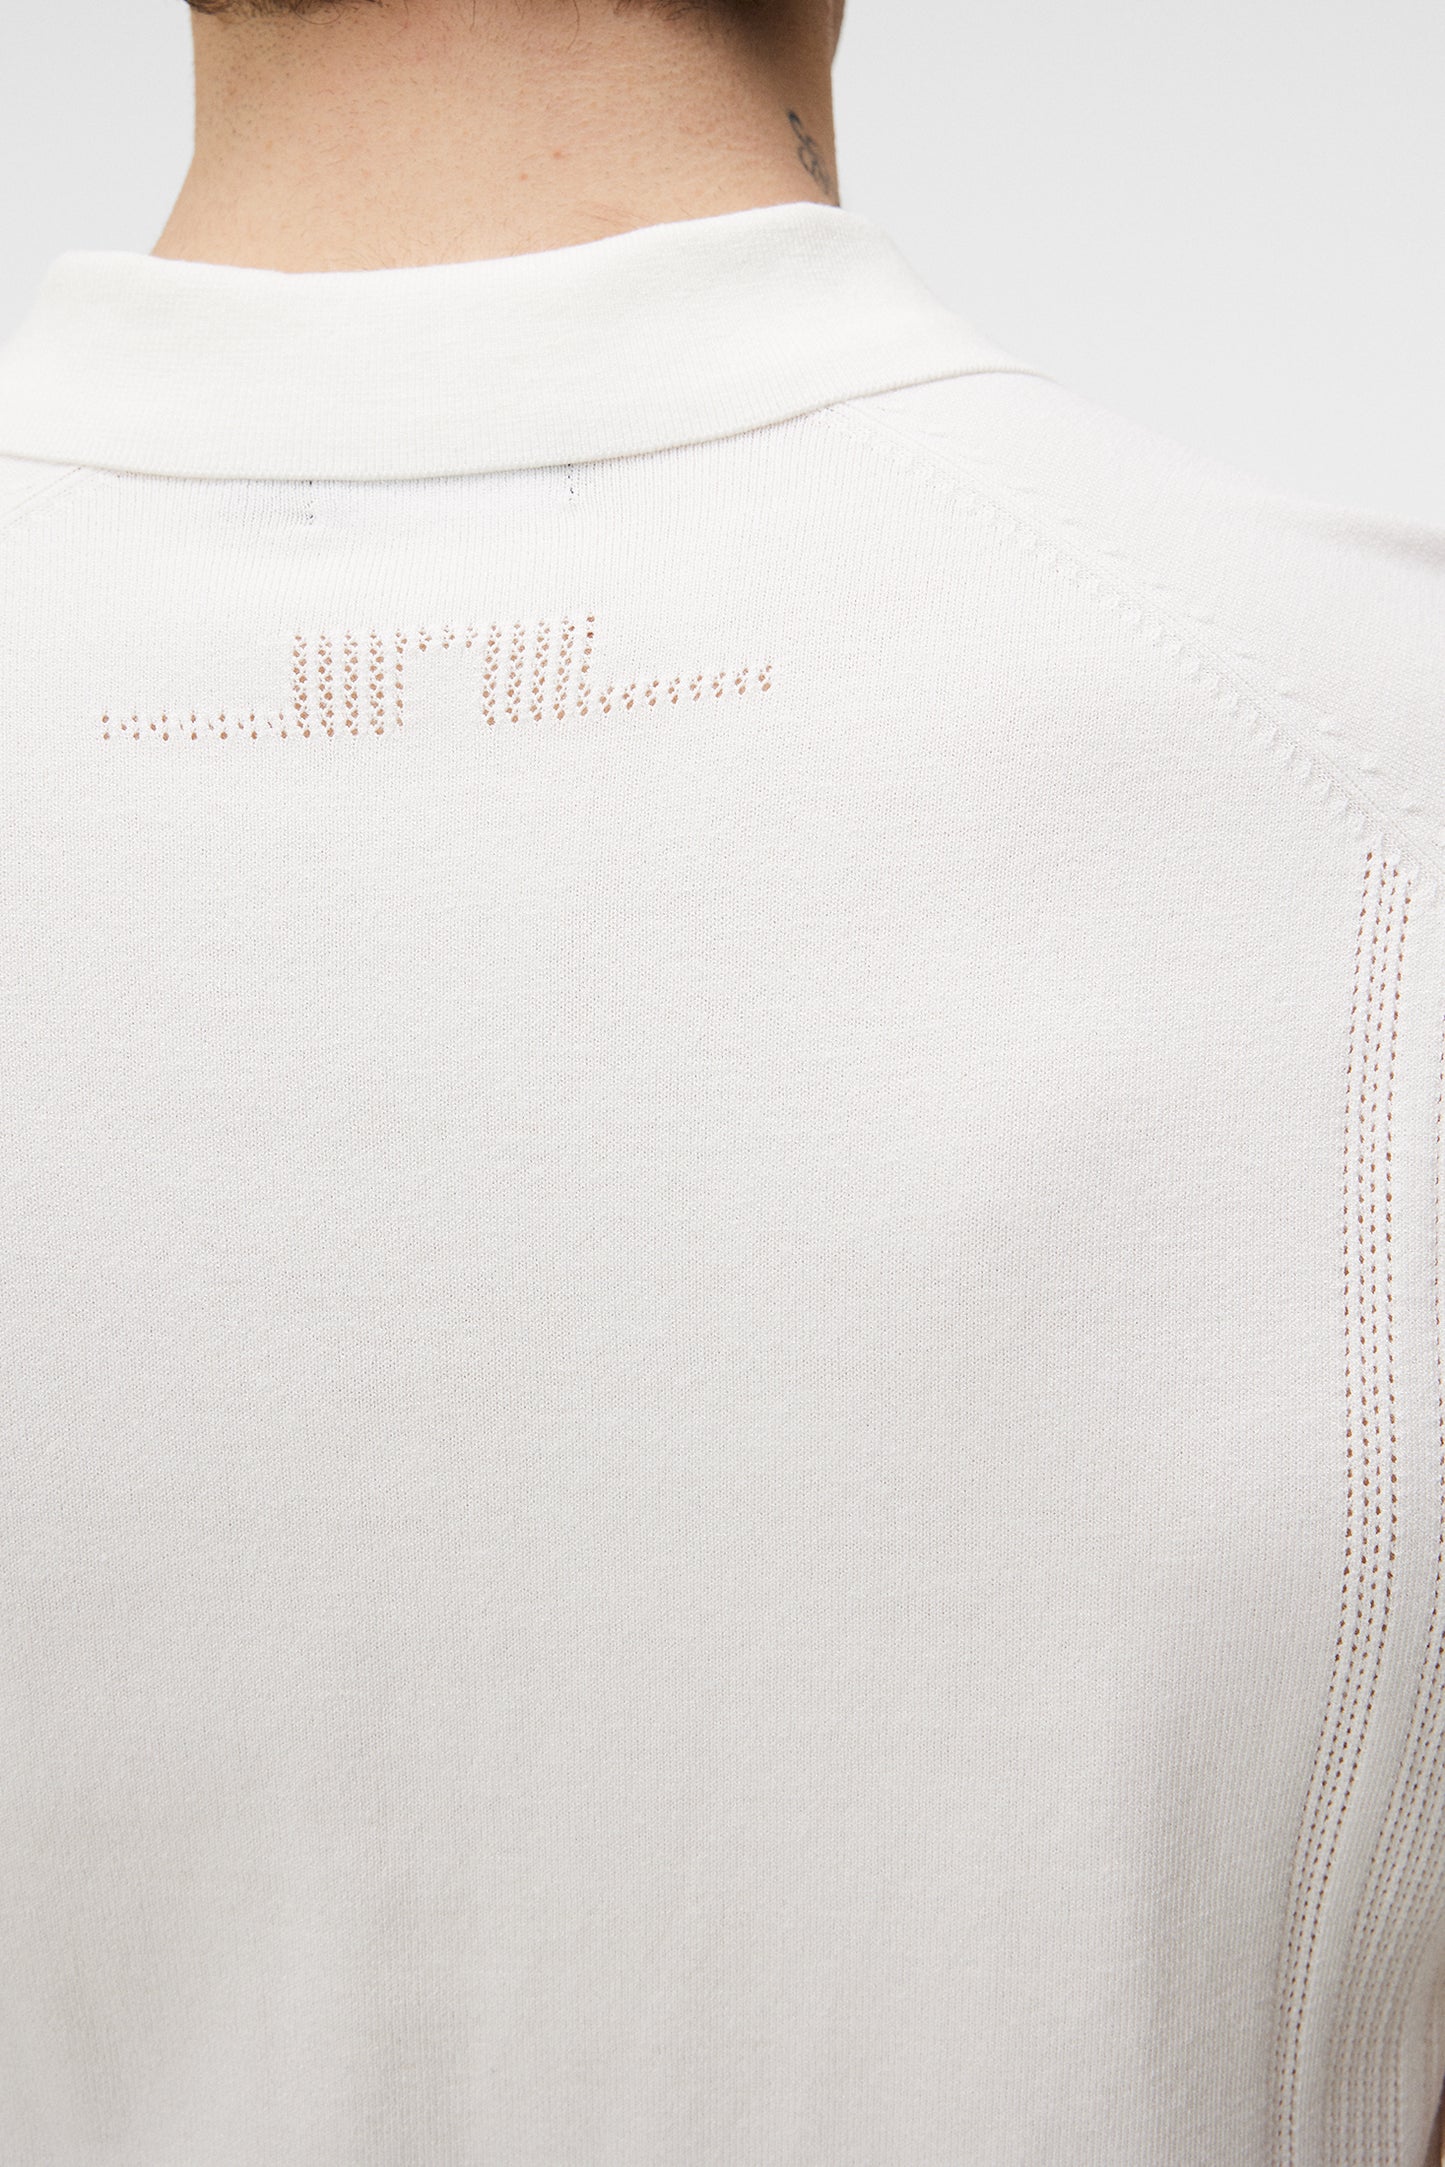 Martines Knitted Shirt / White